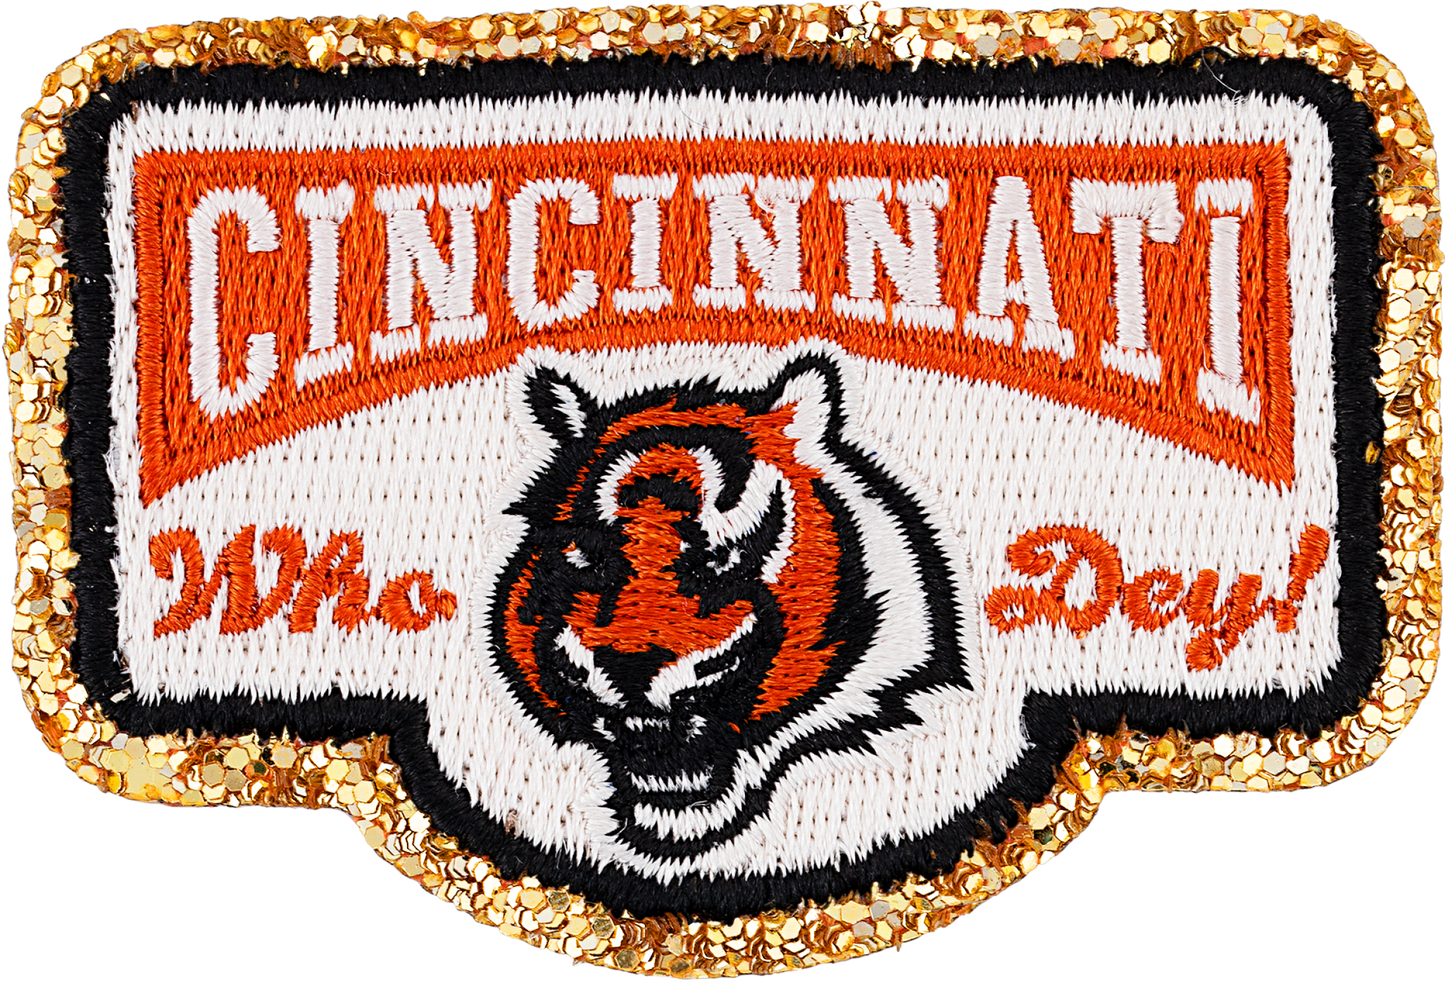 Cincinnati Bengals Patch (Pre-Order)